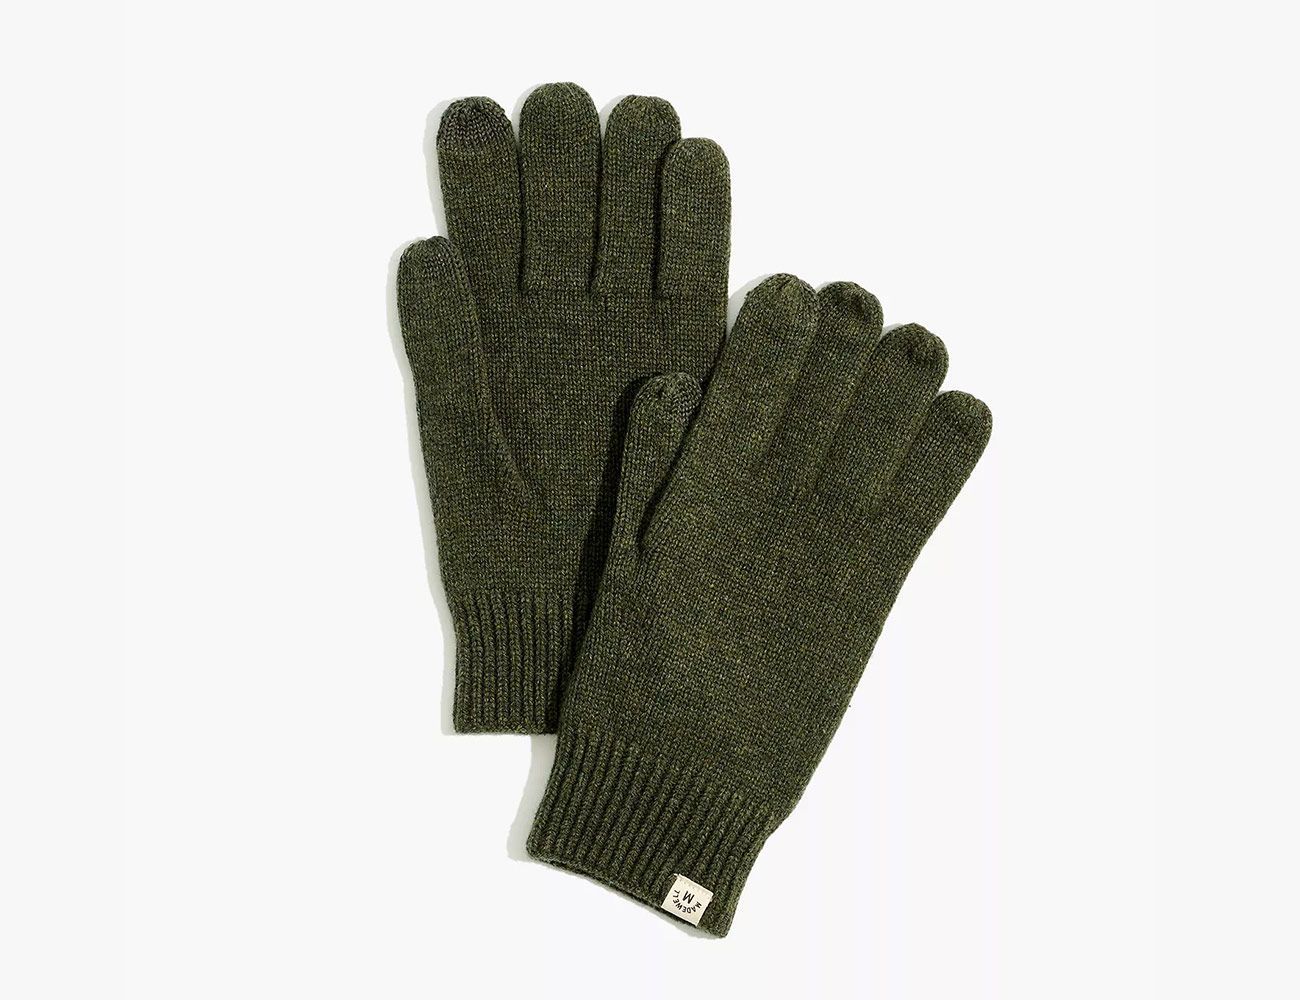 Cognito Long Gloves Green S Man DressInn Men Accessories Gloves 